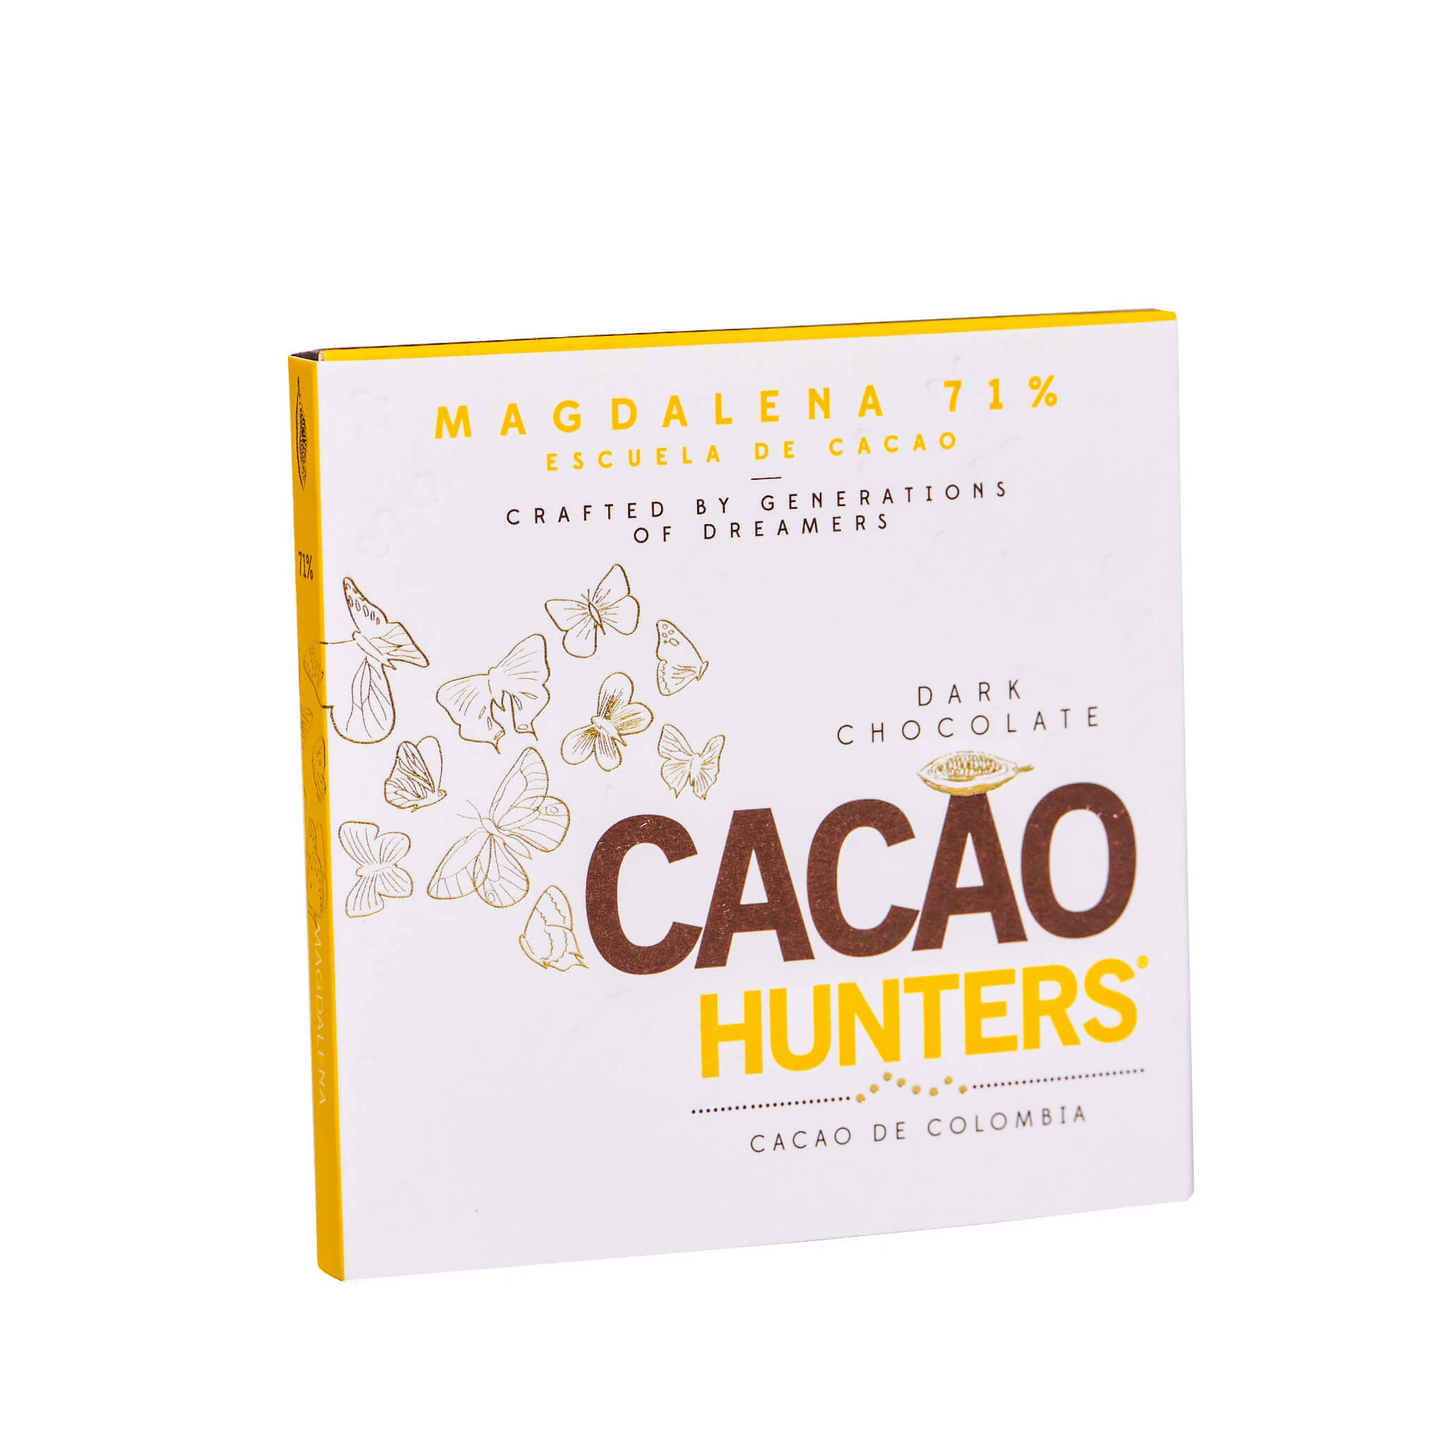 Cacao Hunters, "Heirloom" Magdalena 71%